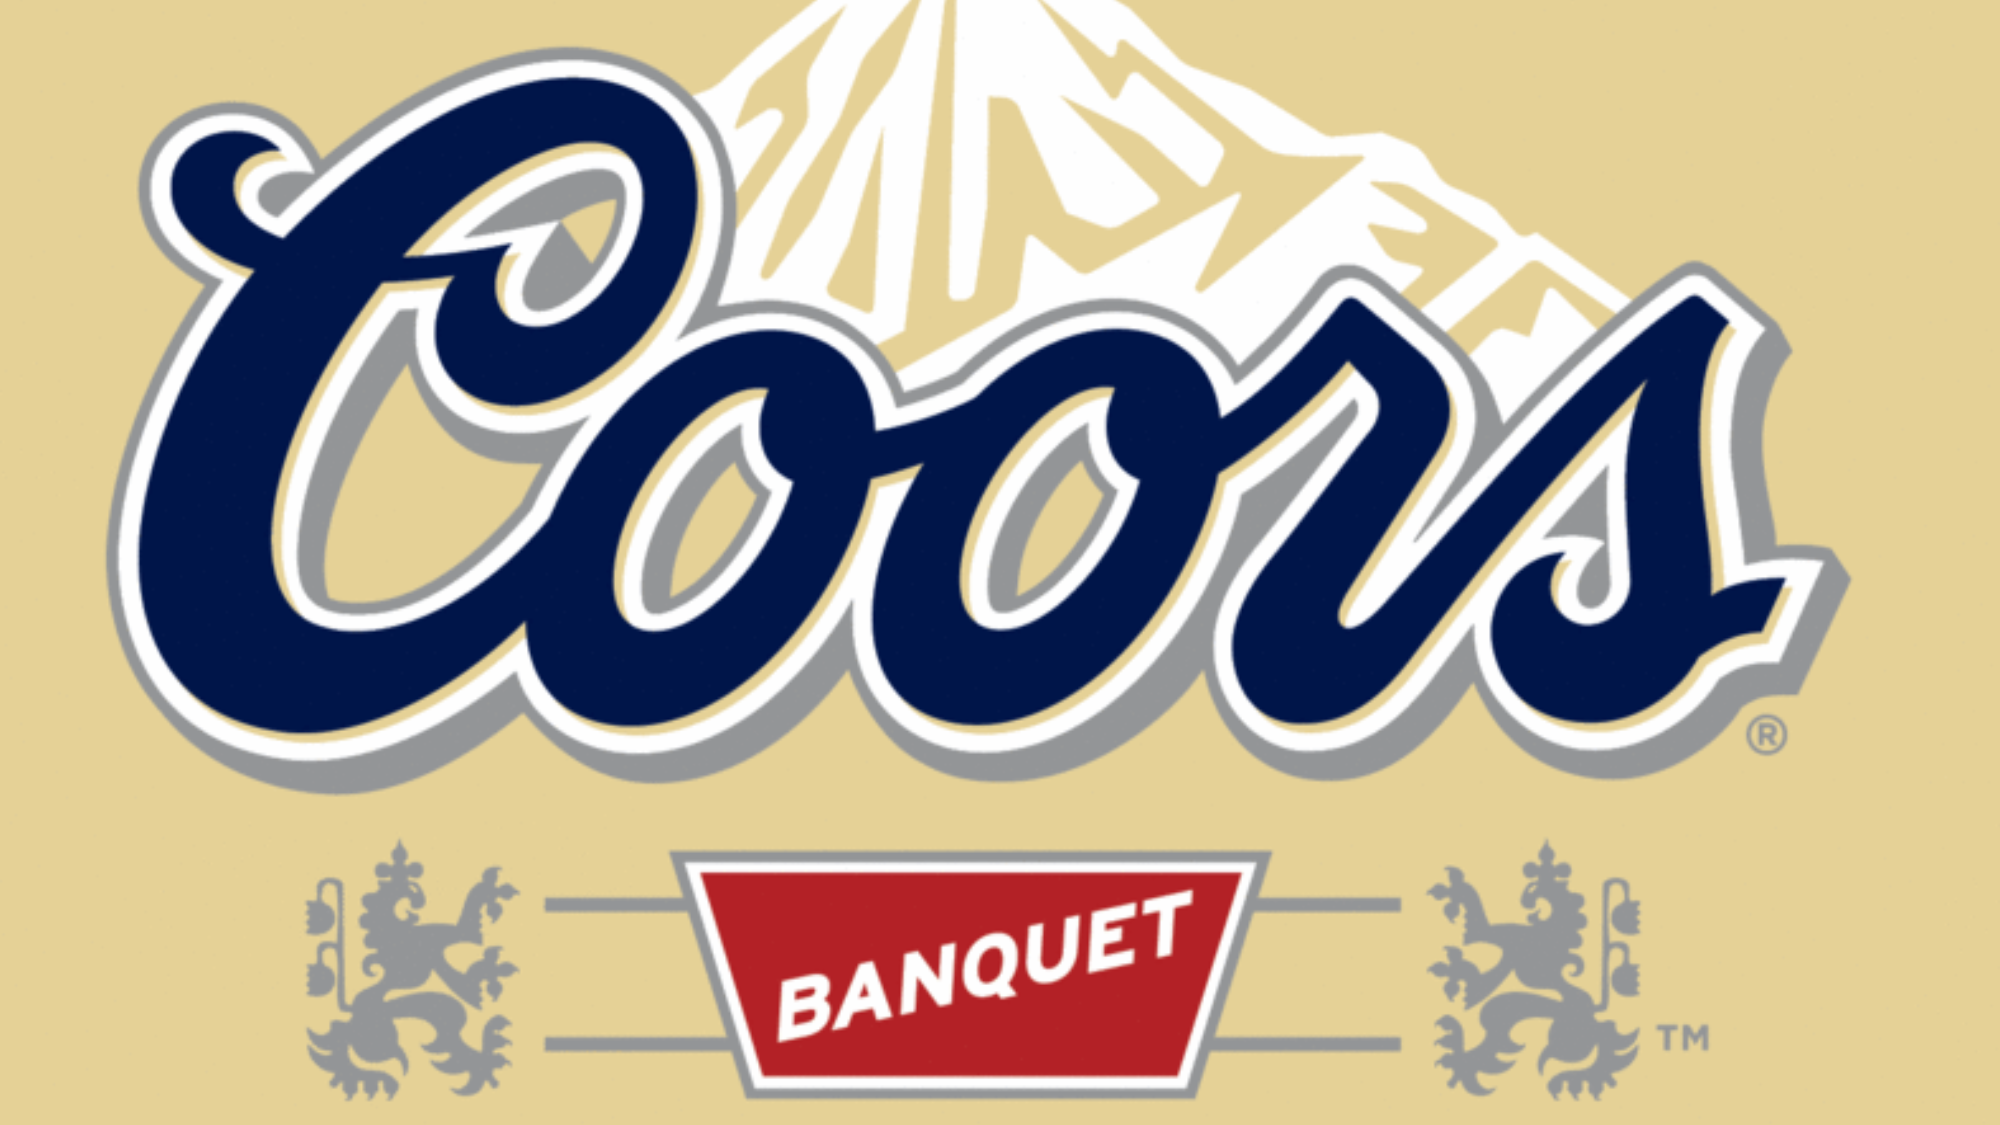 Coors Banquet  Beer Profile